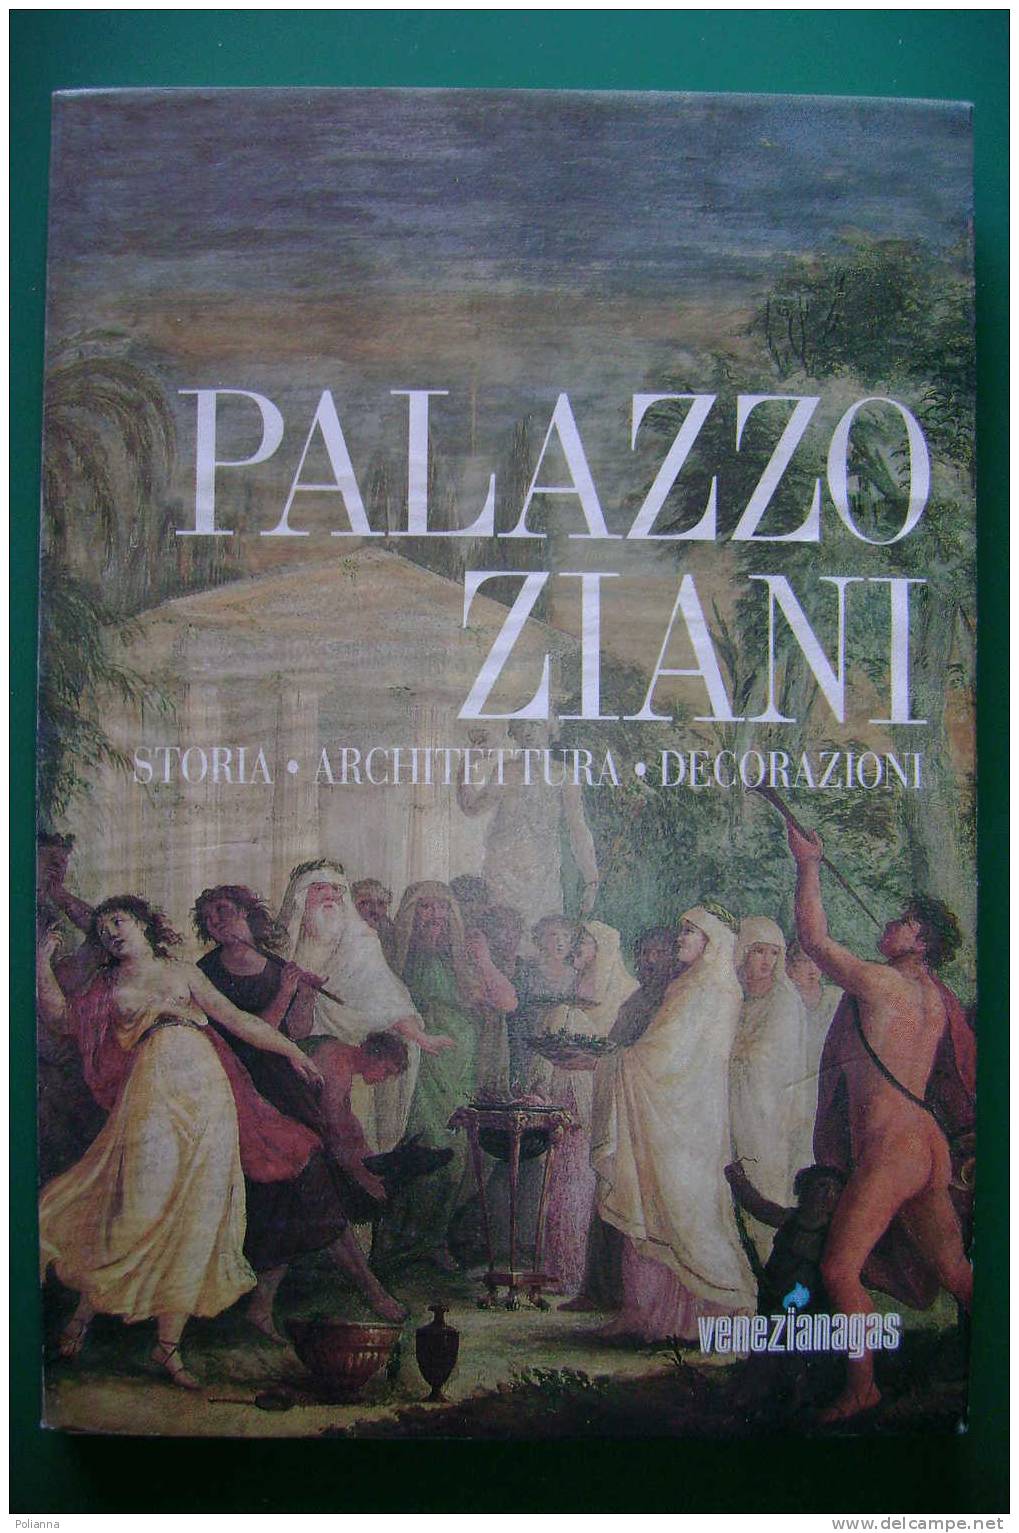 PDG/47 PALAZZO ZIANI Venezianagas 1994/VENEZIA/ARCHITETTURA - Arts, Antiquity